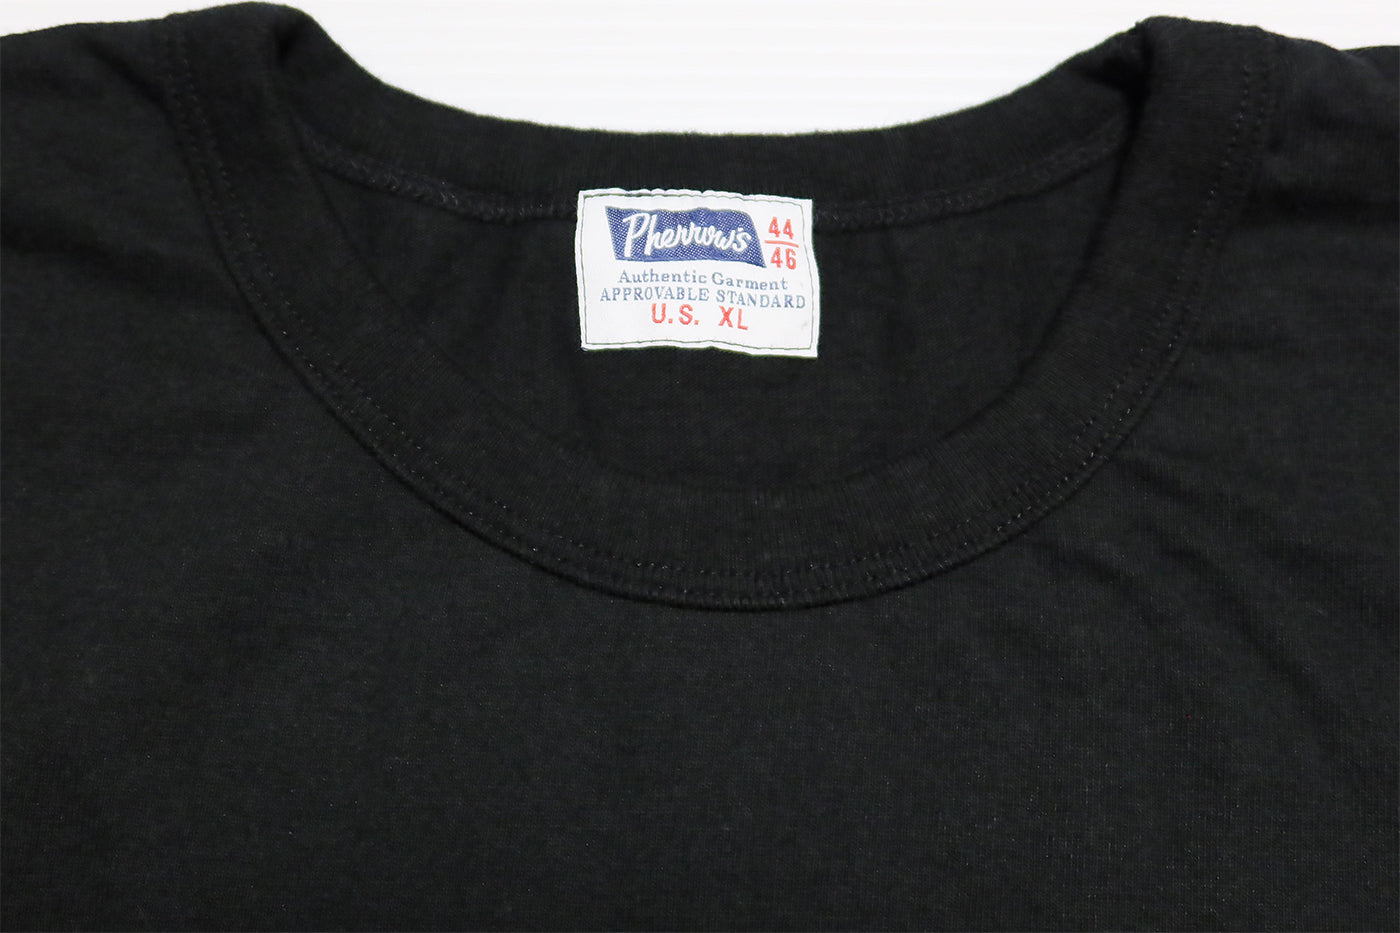 Pherrow's Fellows T-shirt GREY Area 51 Men's American Casual Short Sleeve 24S-PMT4 Made in Japan